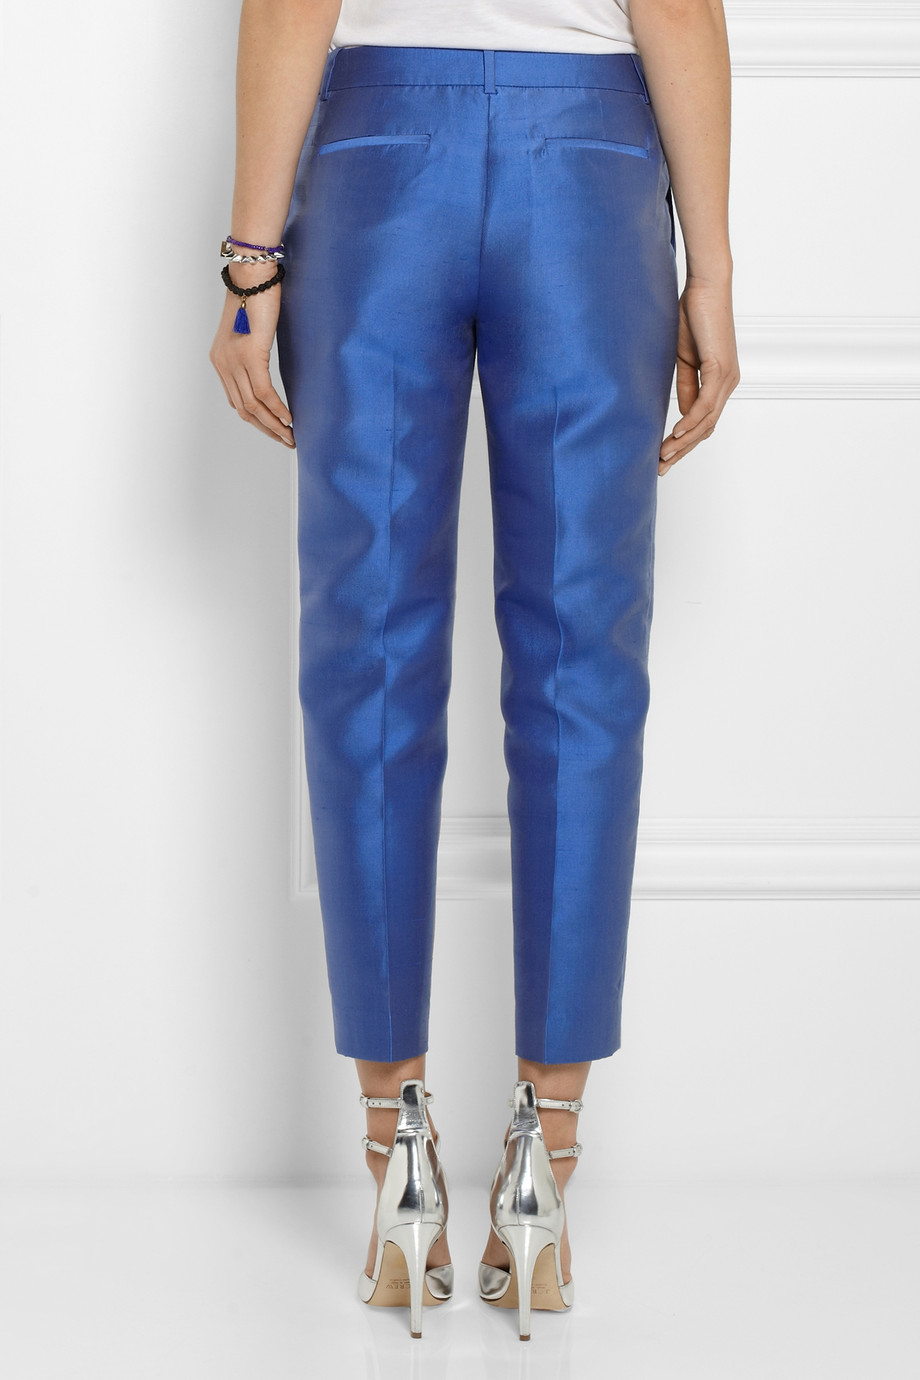 J.crew Collection Silk-Blend Shantung Straight-Leg Pants in Blue | Lyst